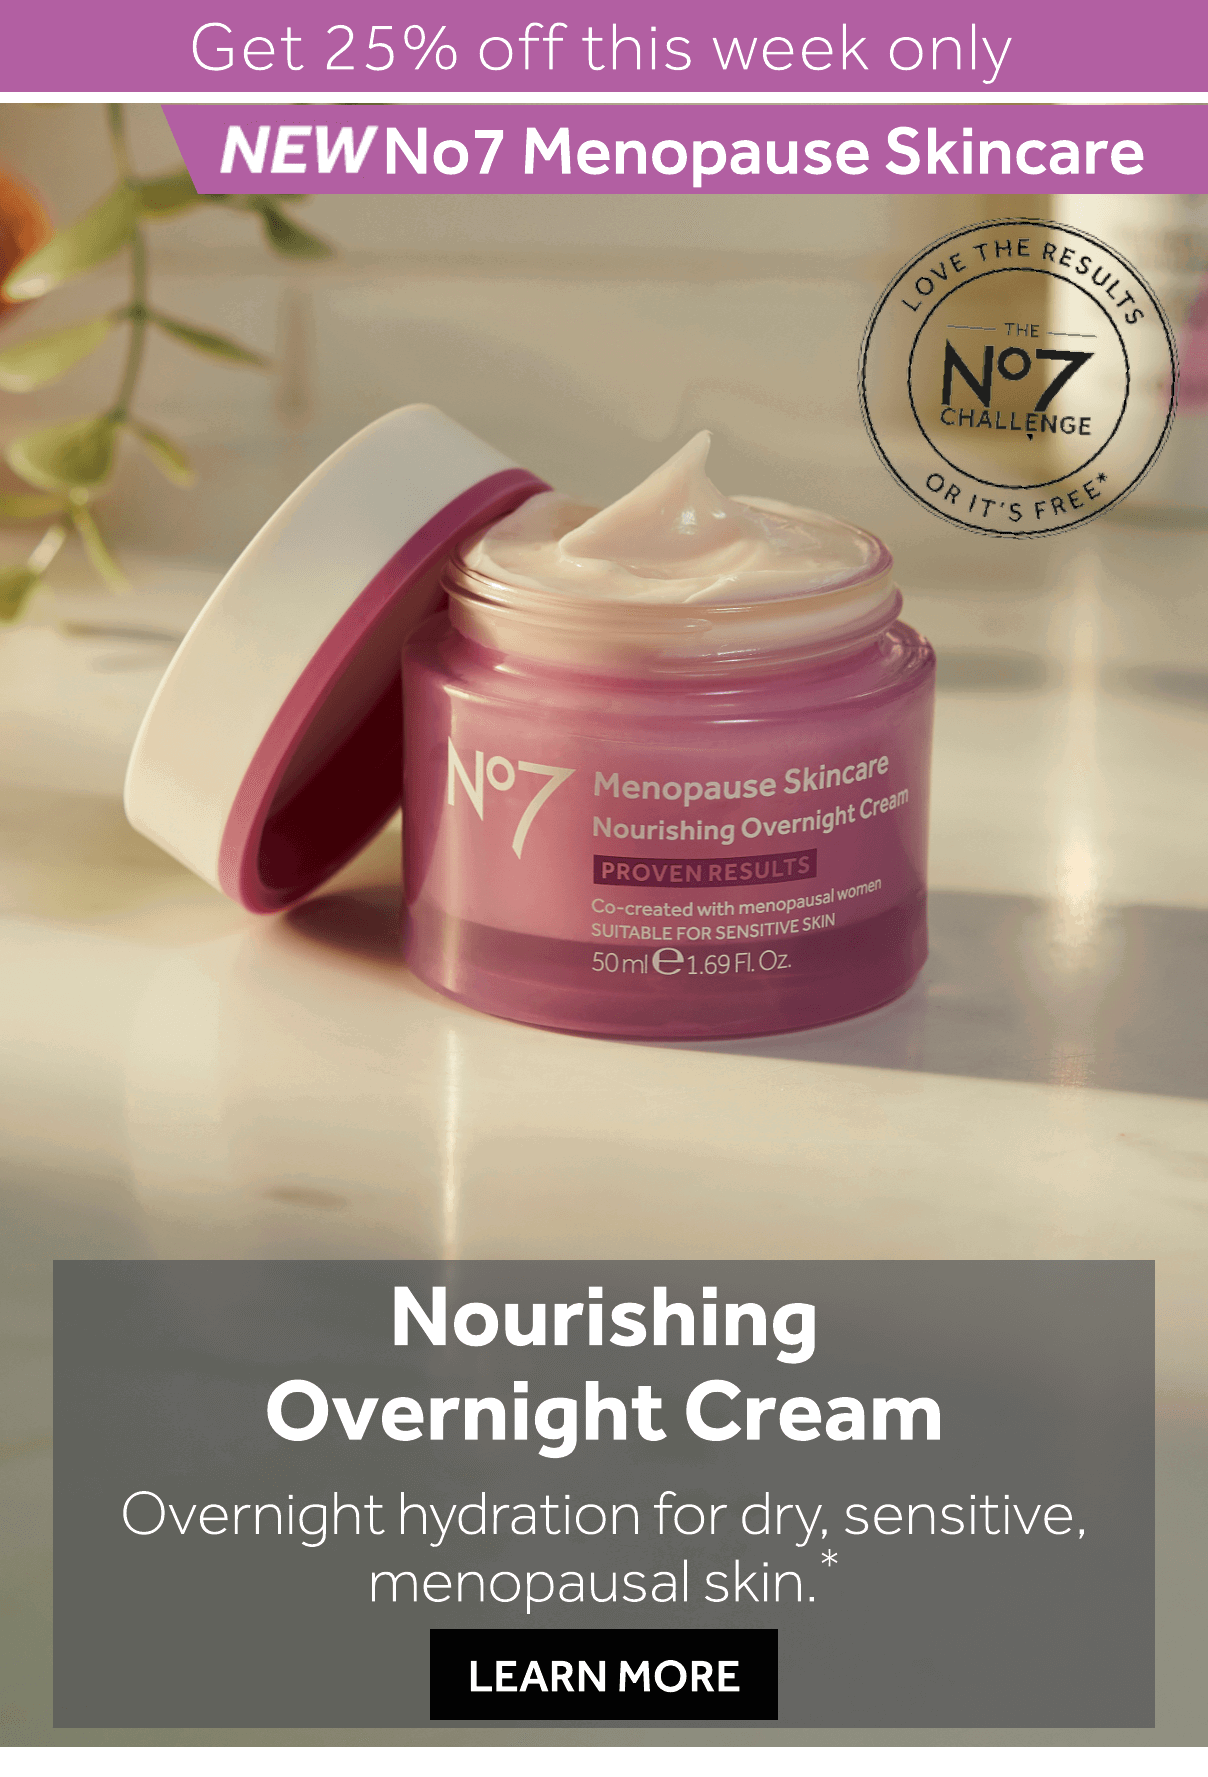 Menopause Skincare Nourishing Overnight Cream